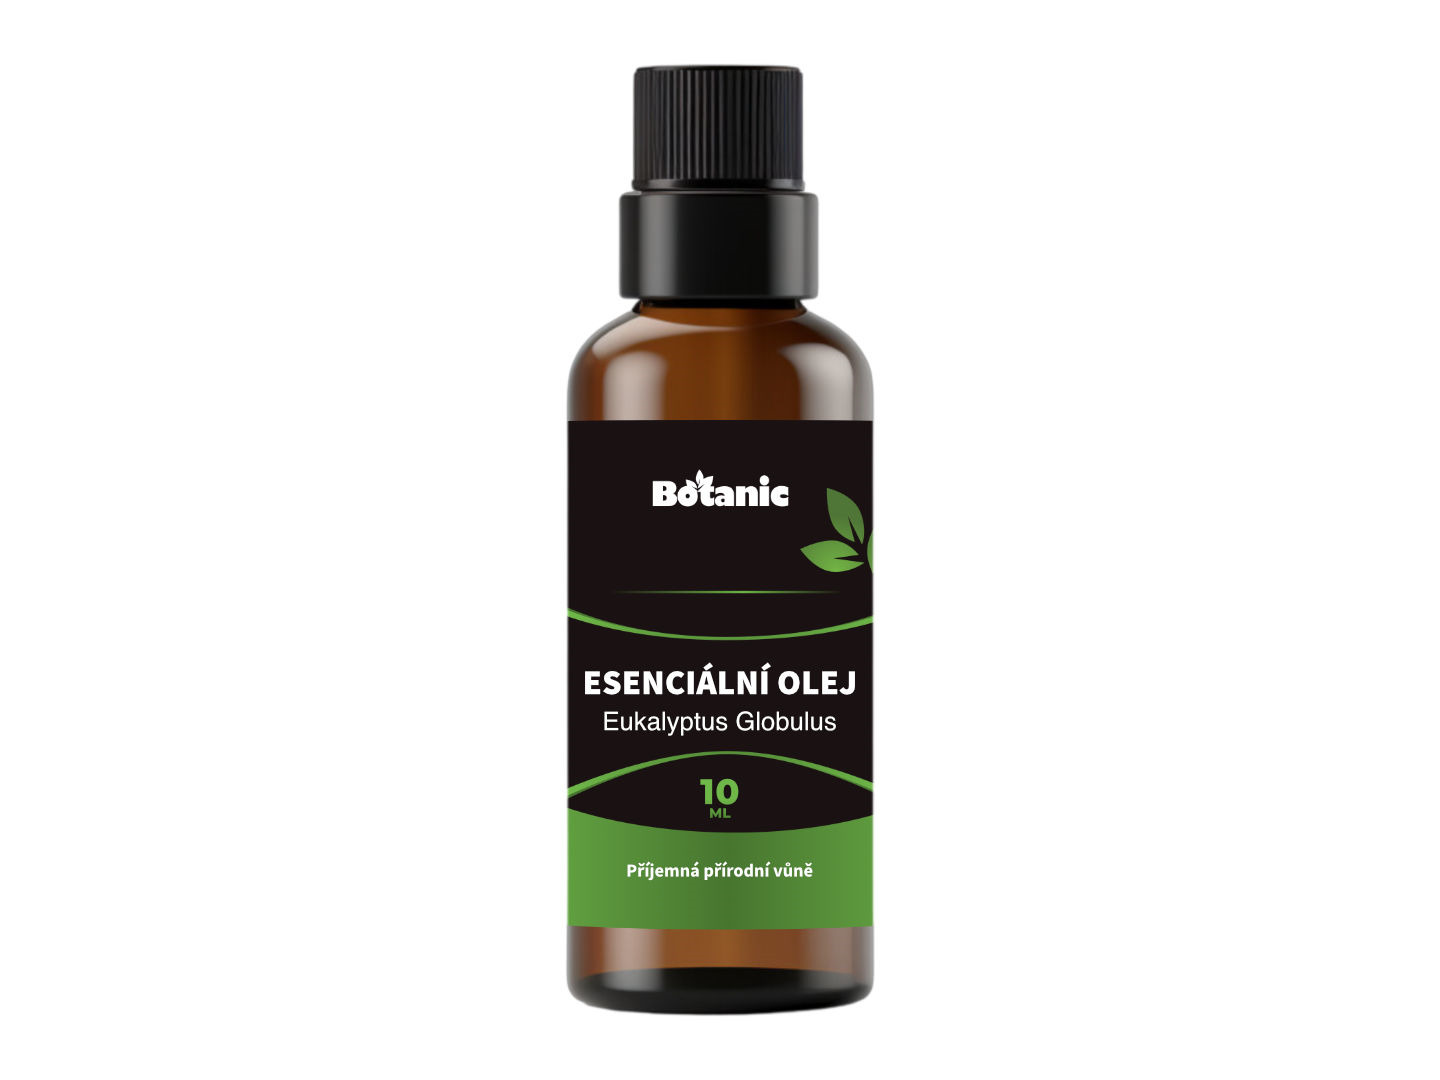 Botanic Esenciální olej - Eukalyptus Globulus 10ml